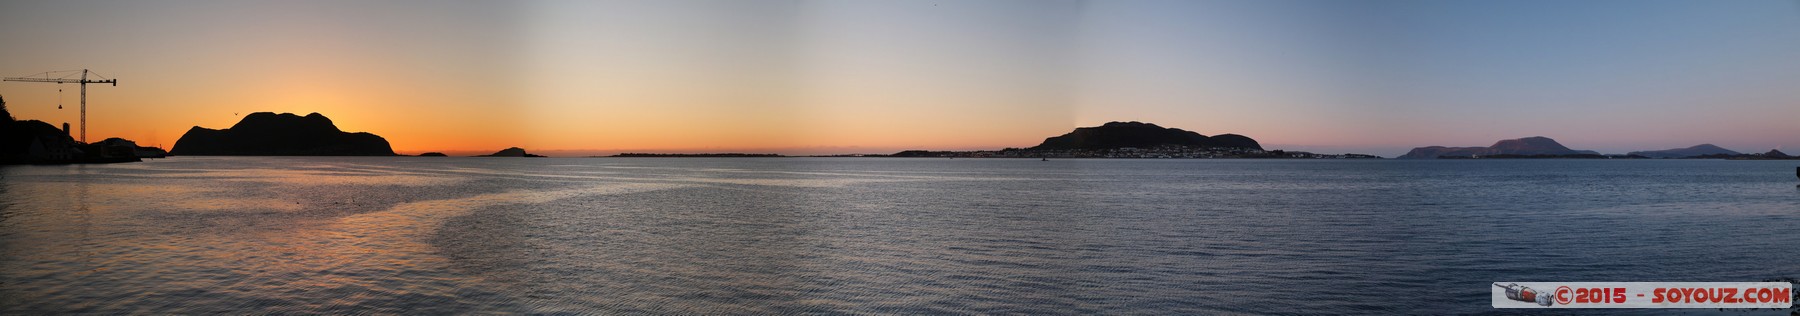 Alesund - Fiskerimuseet - Sunset - Panorama
Stitched Panorama
Mots-clés: lesund geo:lat=62.47386300 geo:lon=6.14881700 geotagged More og Romdal NOR Norvège Norway Alesund sunset panorama Lumiere